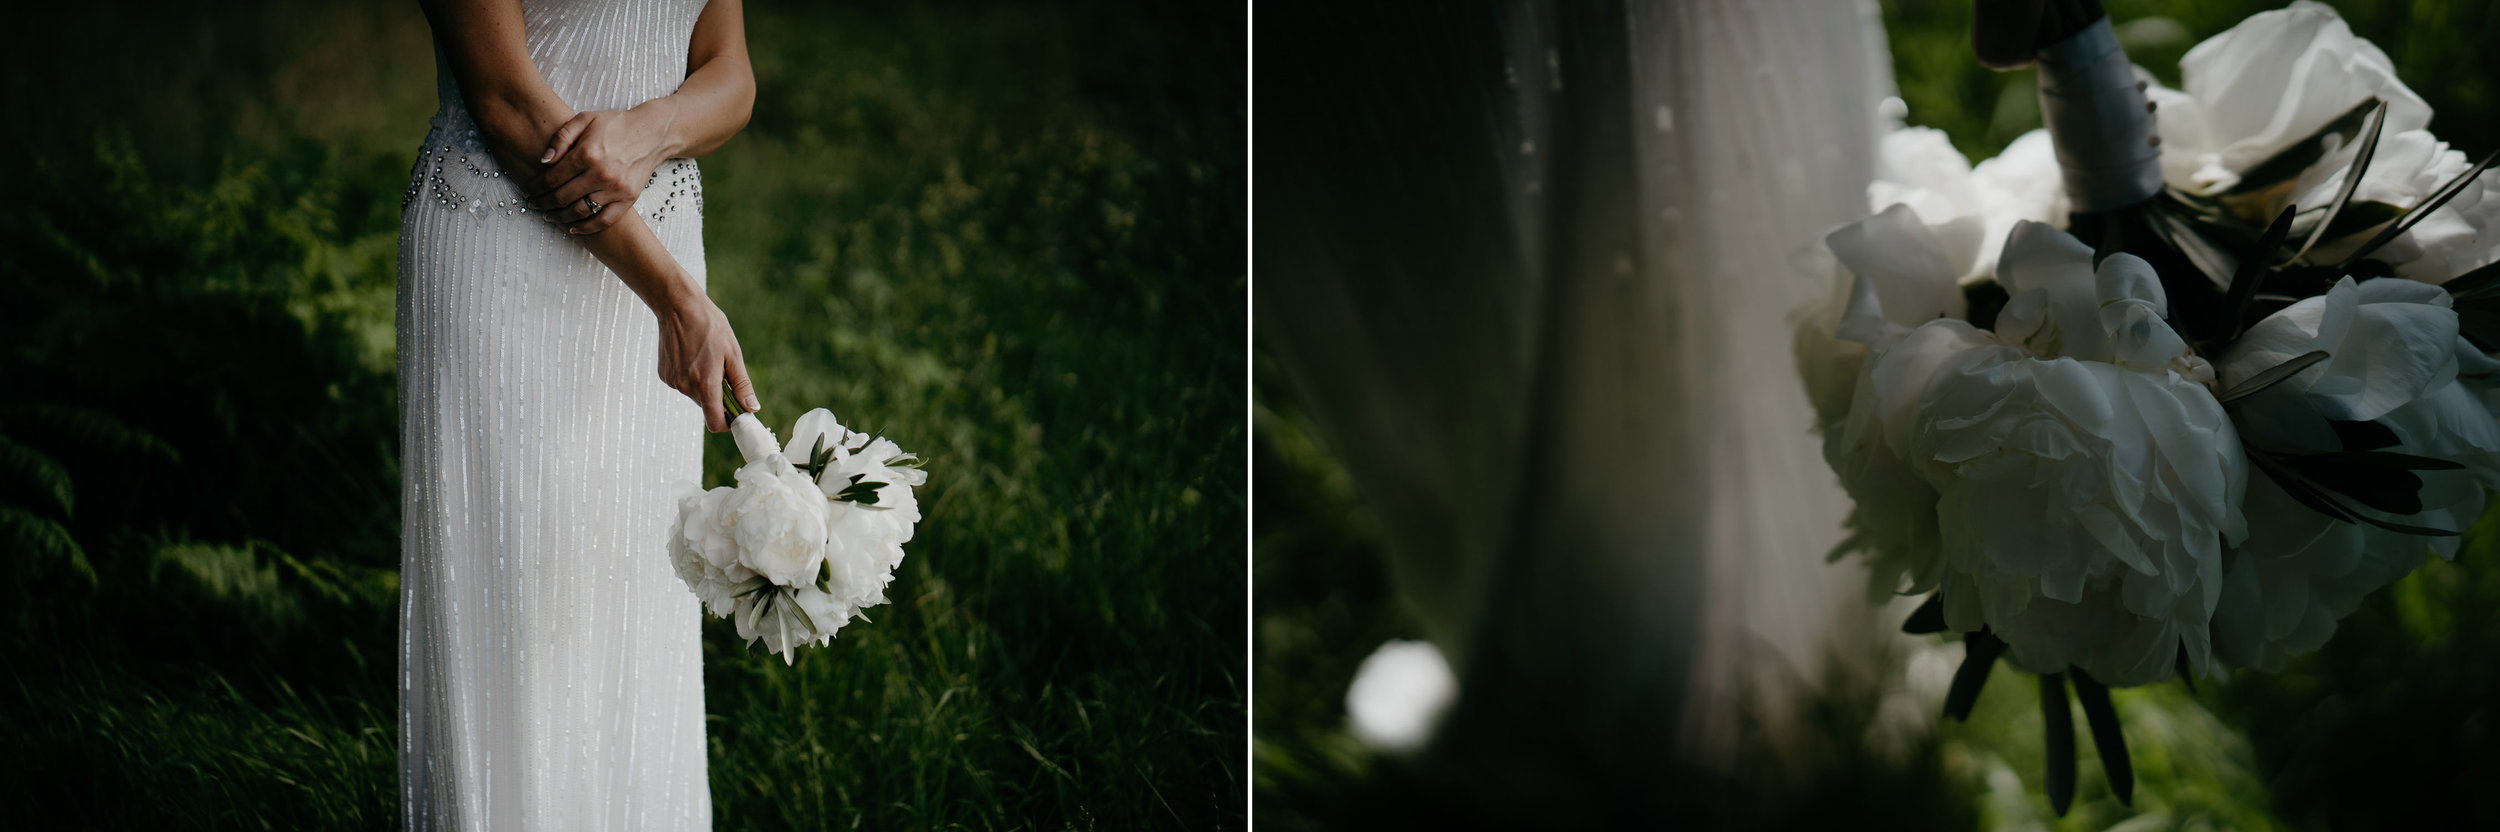 bruidsfotografie amsterdam bloemen fotos